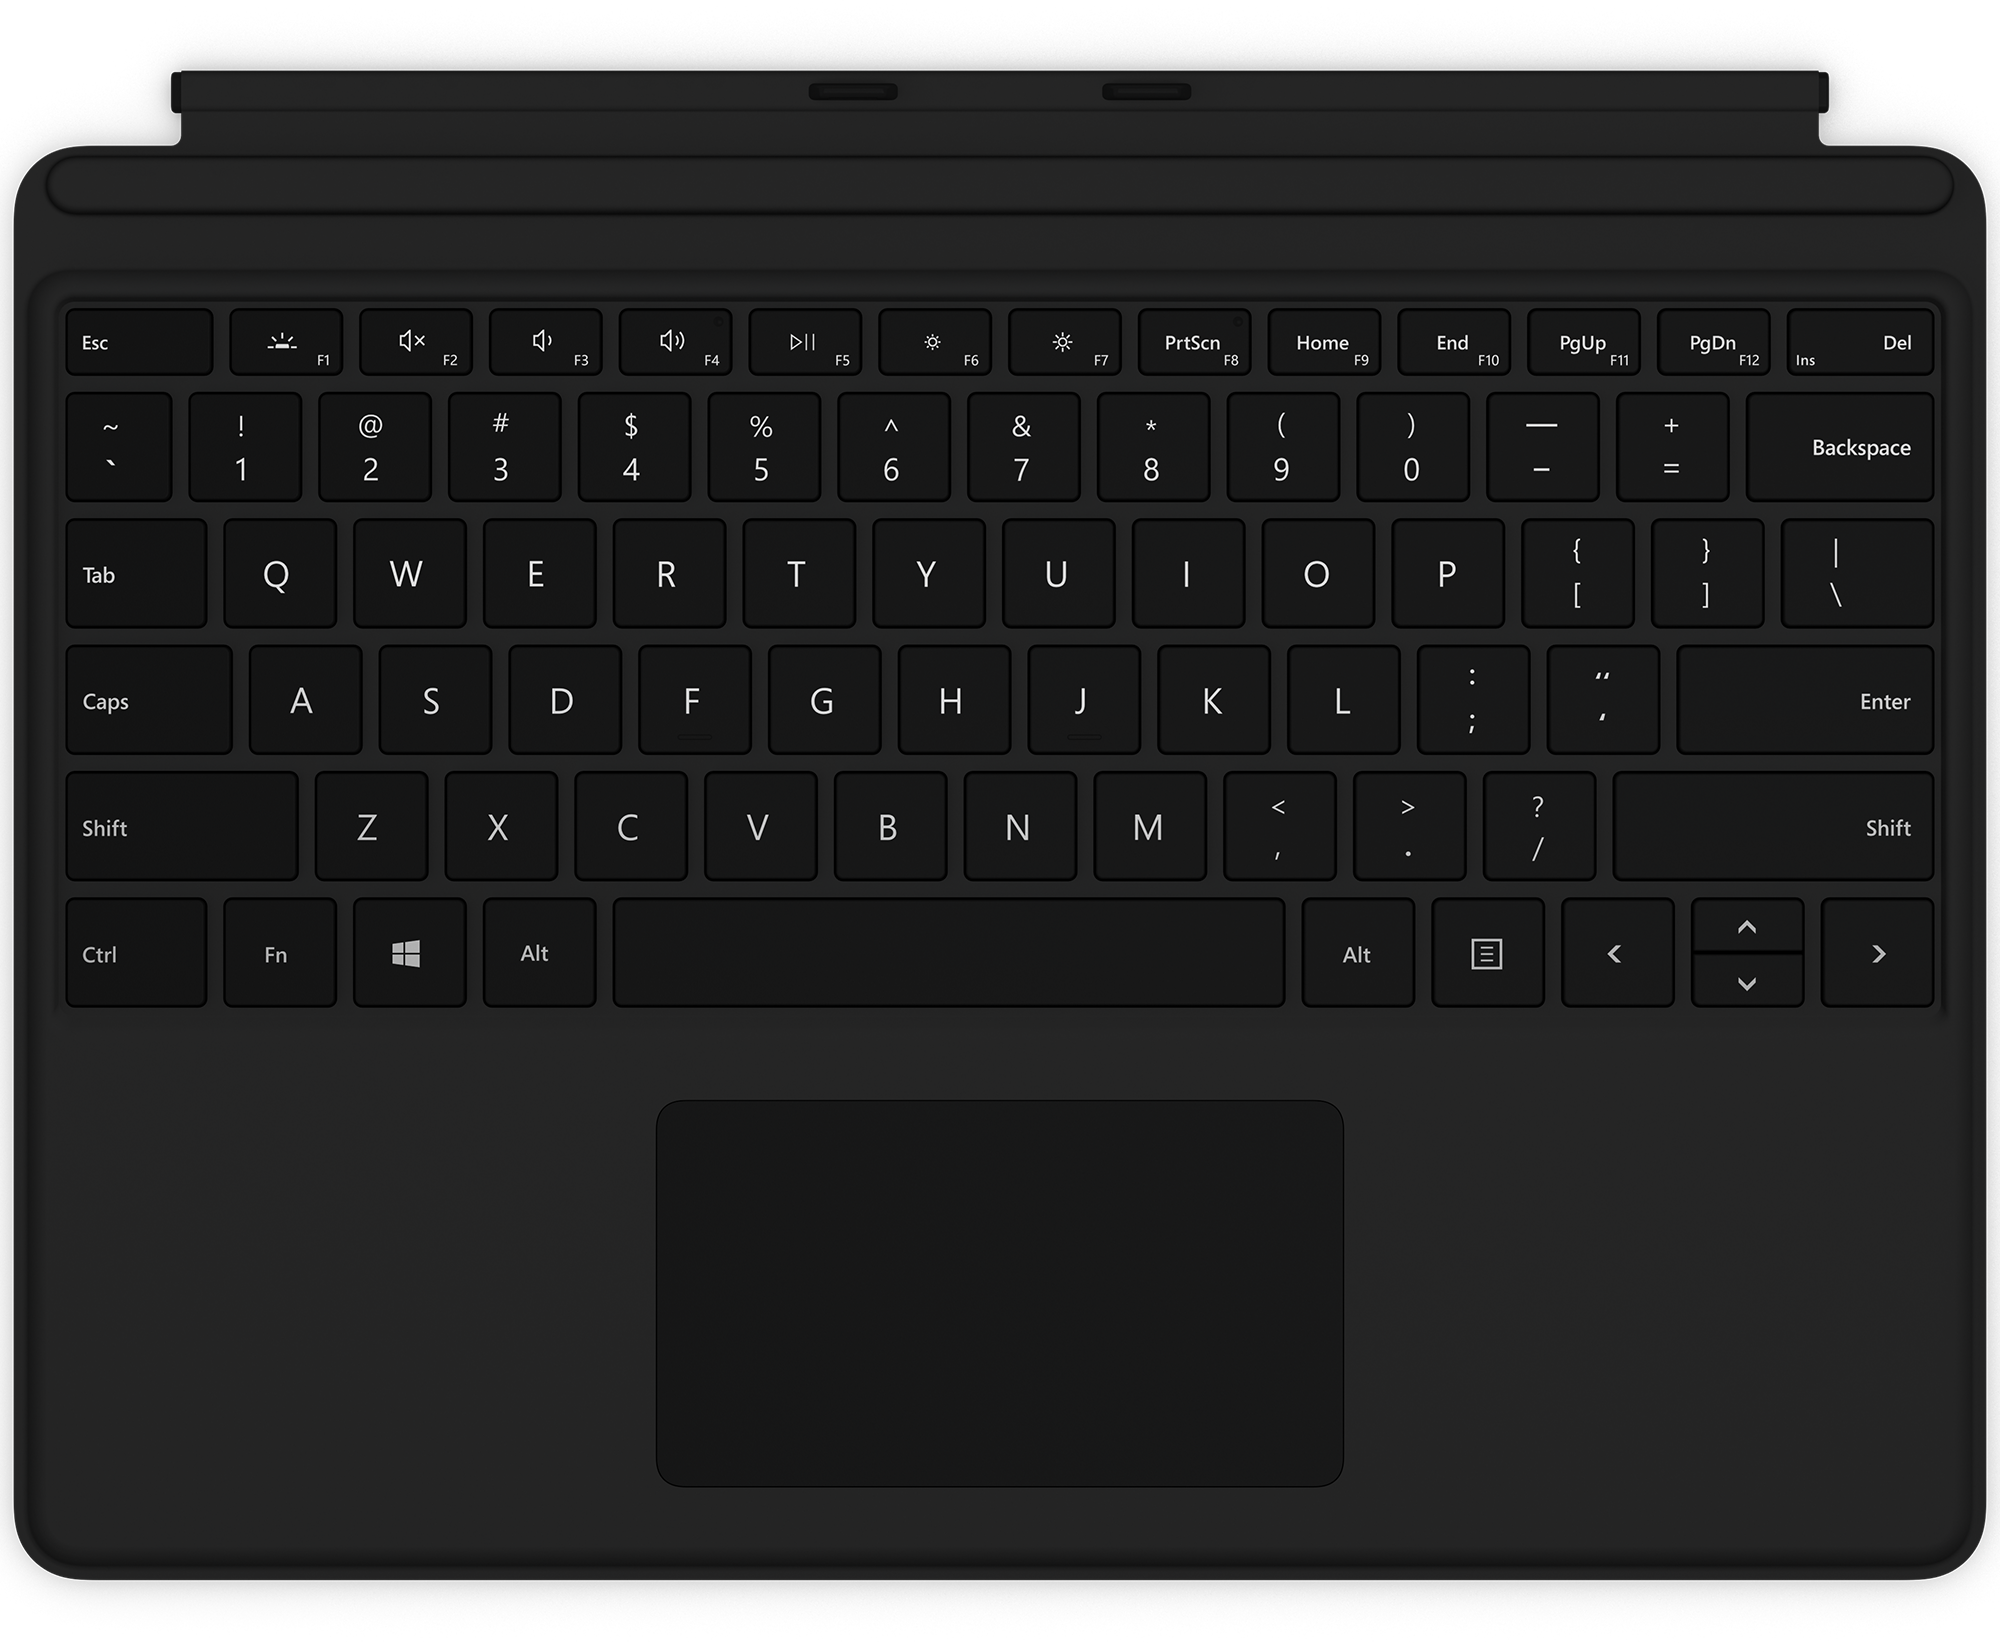 Custom Made Keyboard  Cover for Microsoft 3000-997E110 keyboard Not Included 